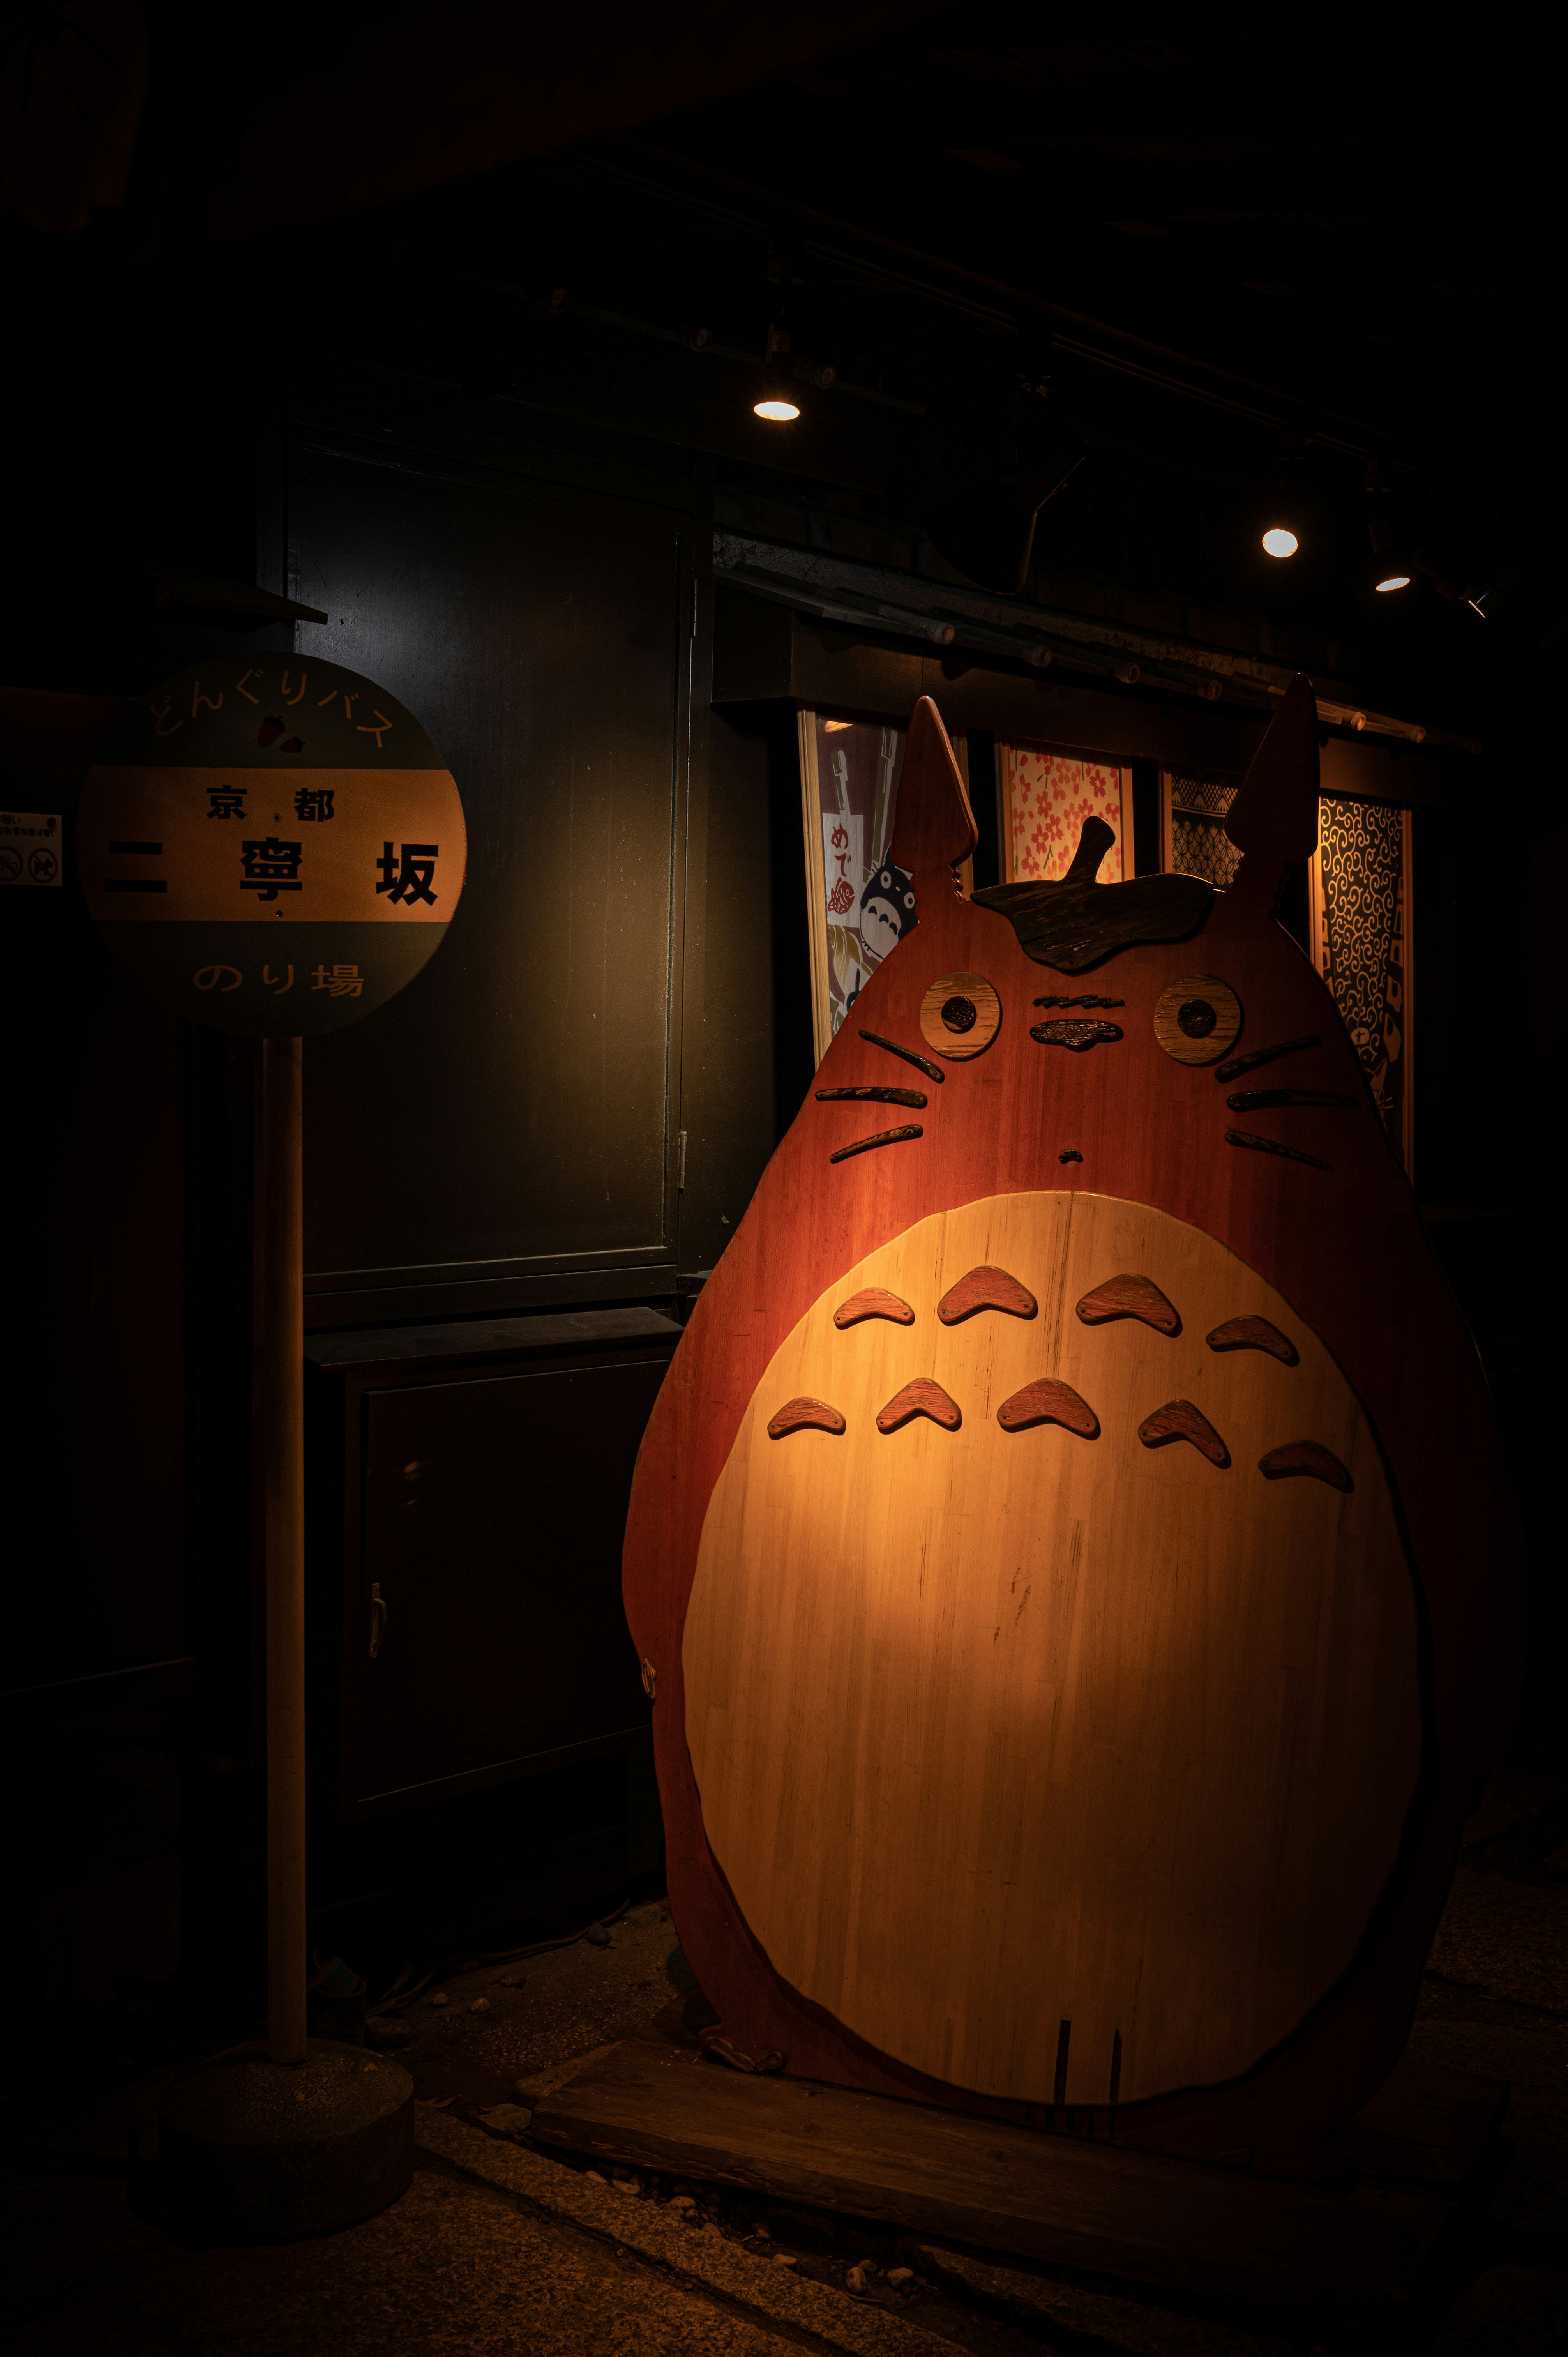 Totoro by night